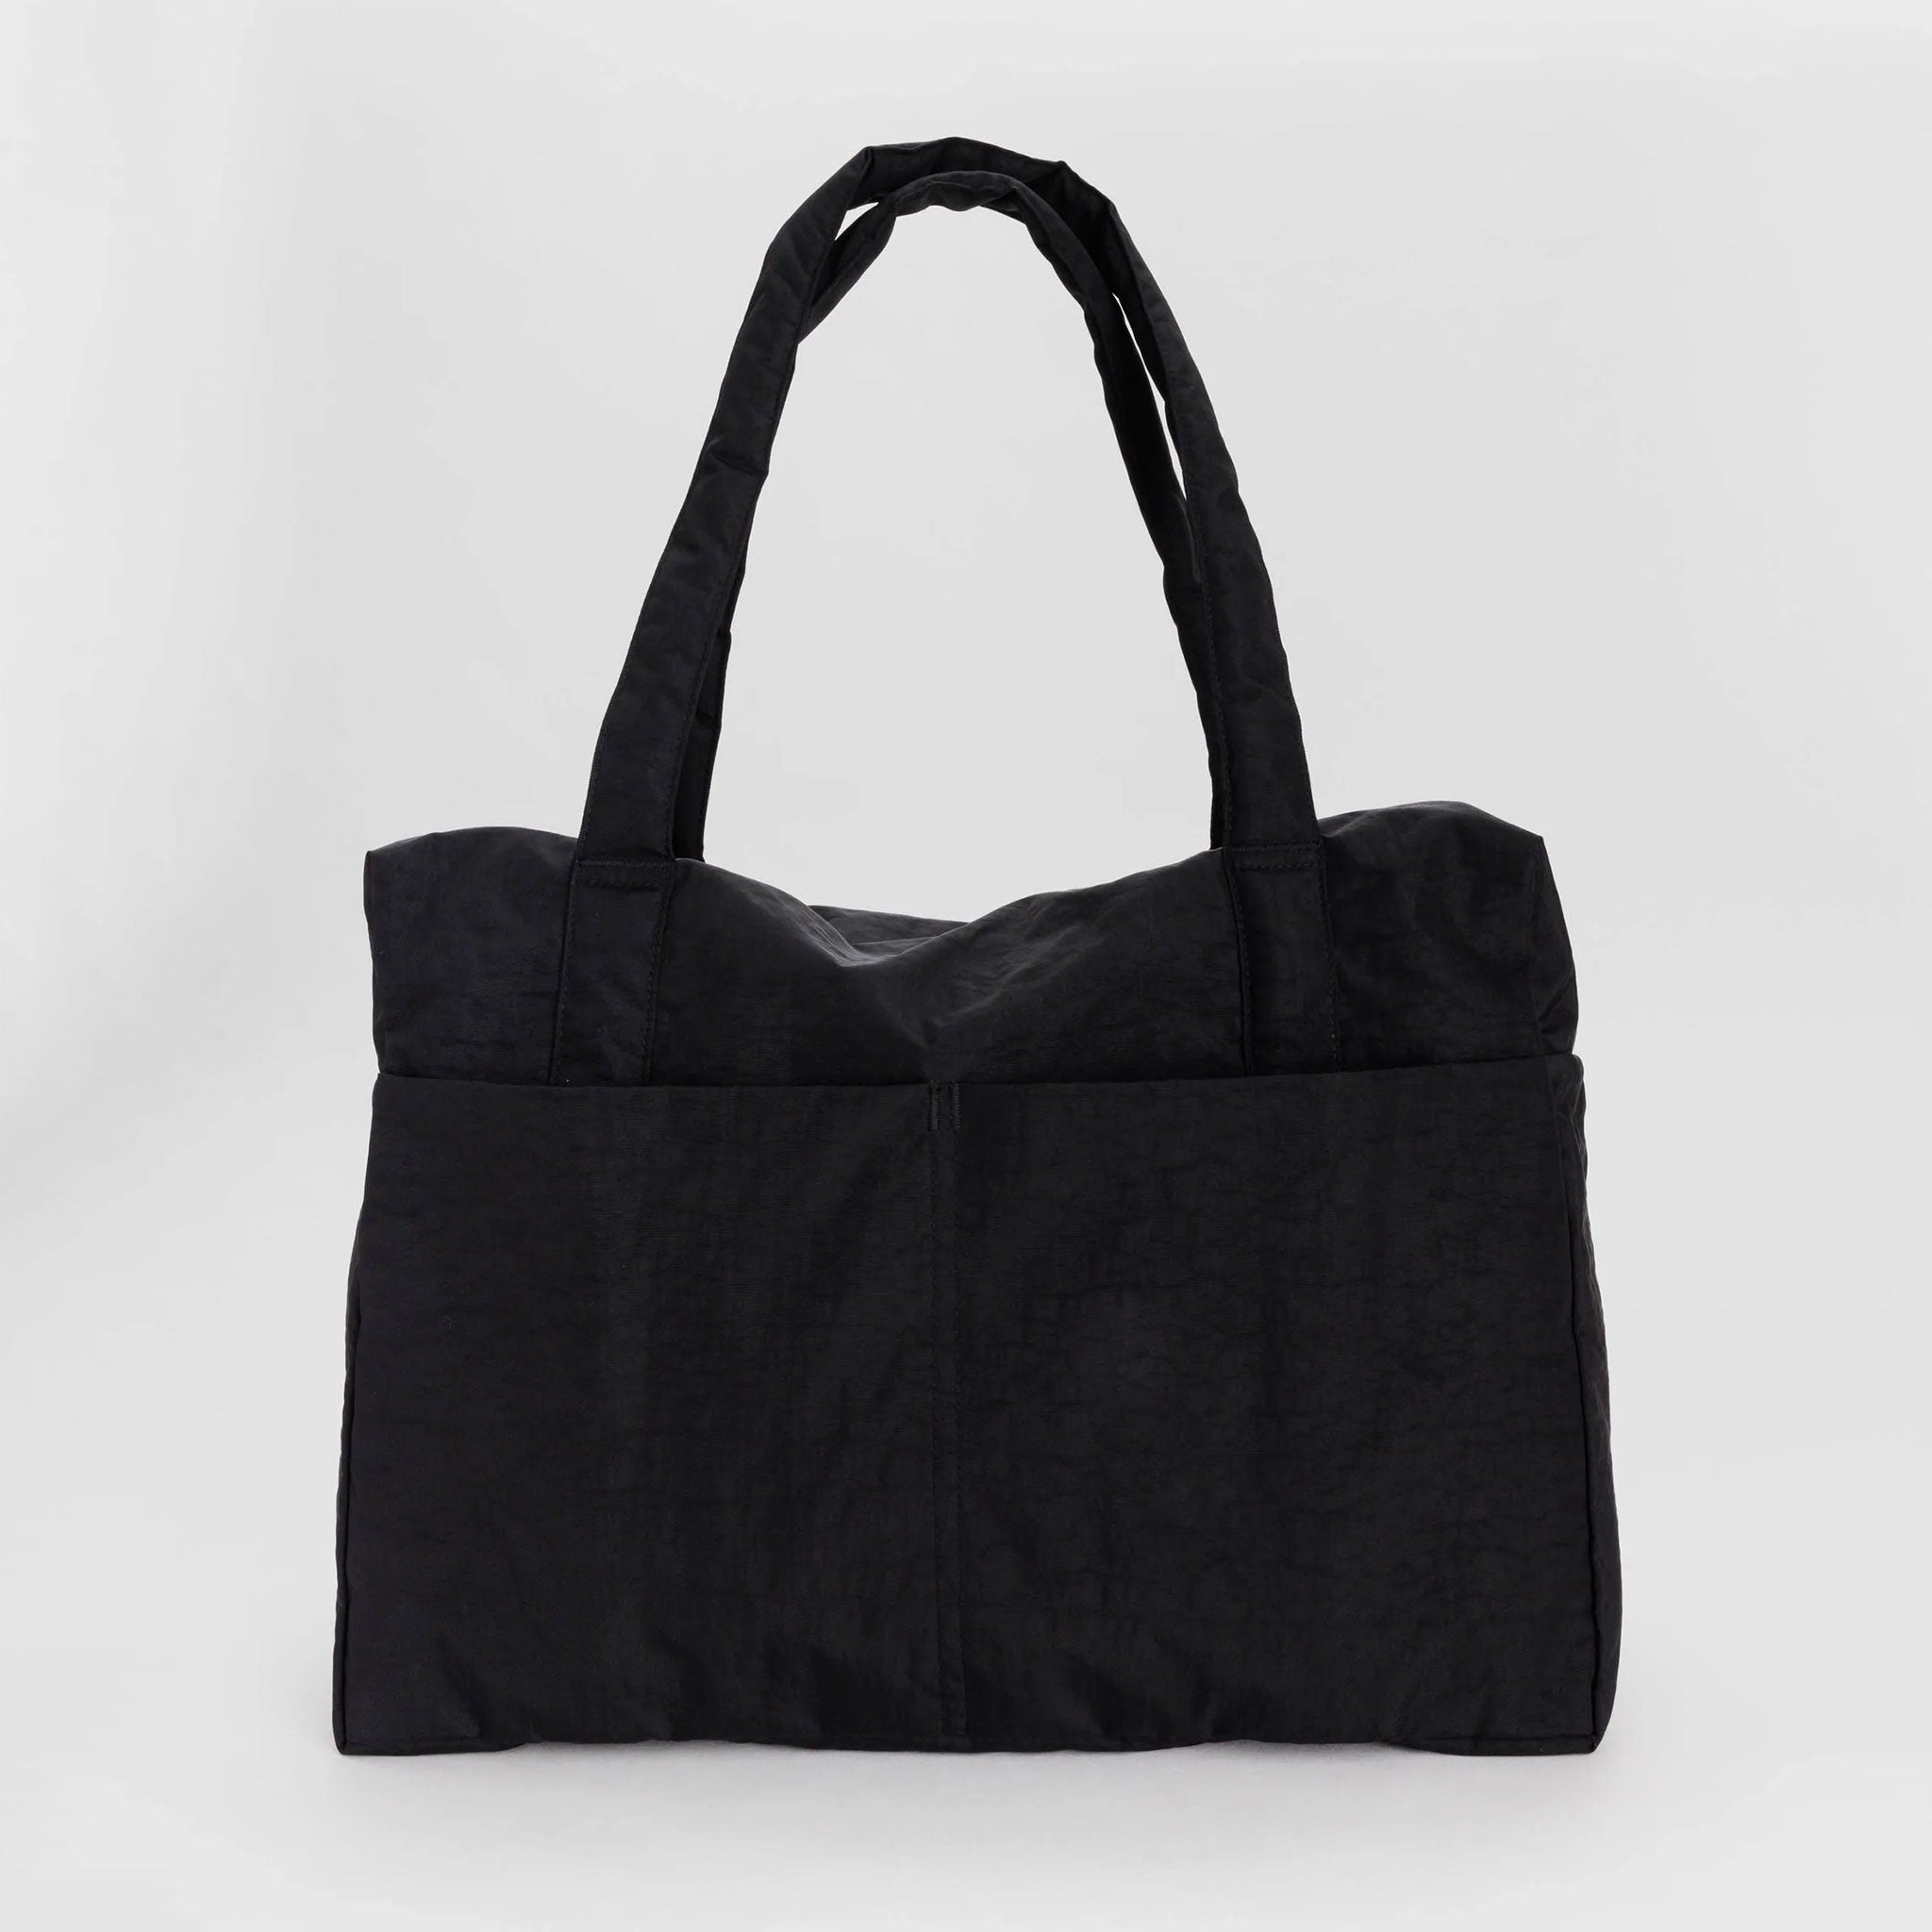 A black nylon bag